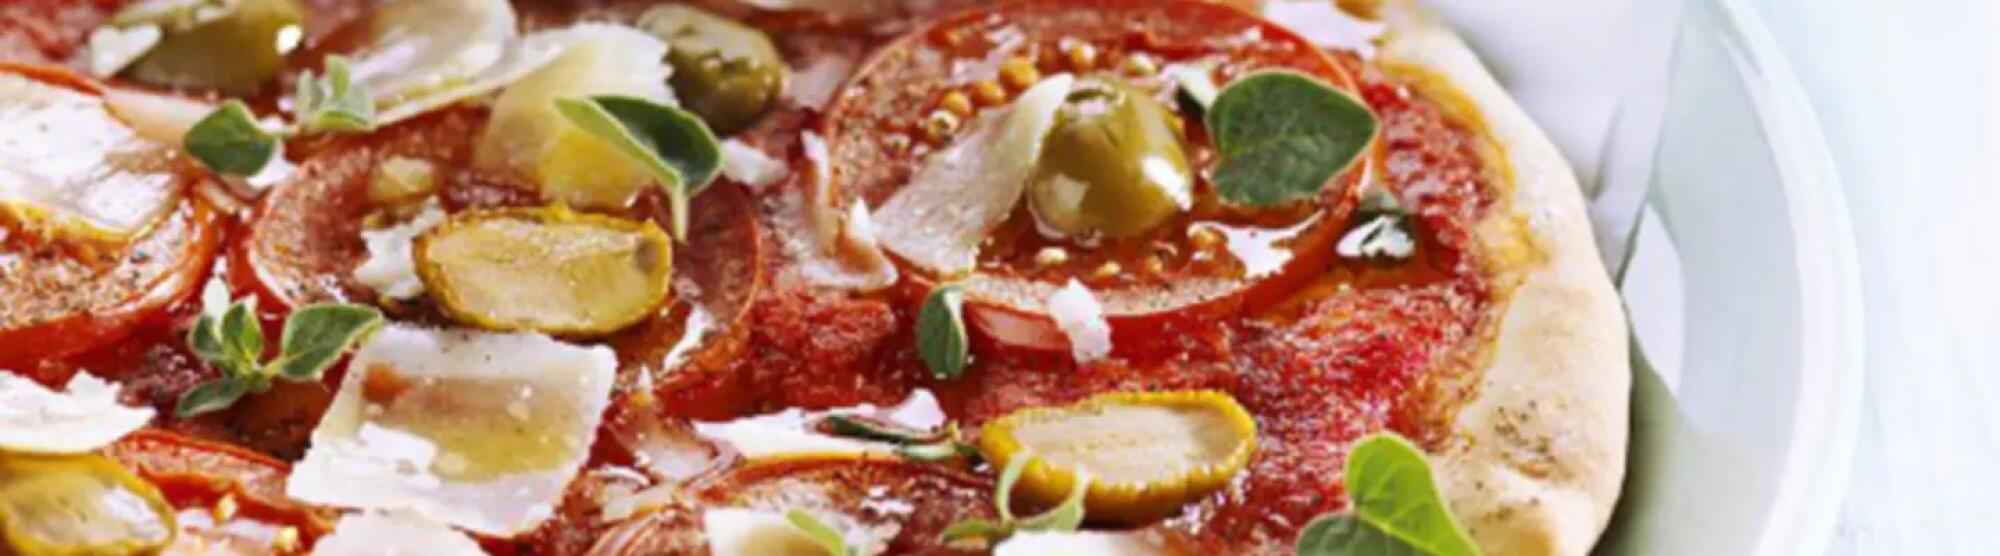 Recette : Pizza tomate, olives et parmesan